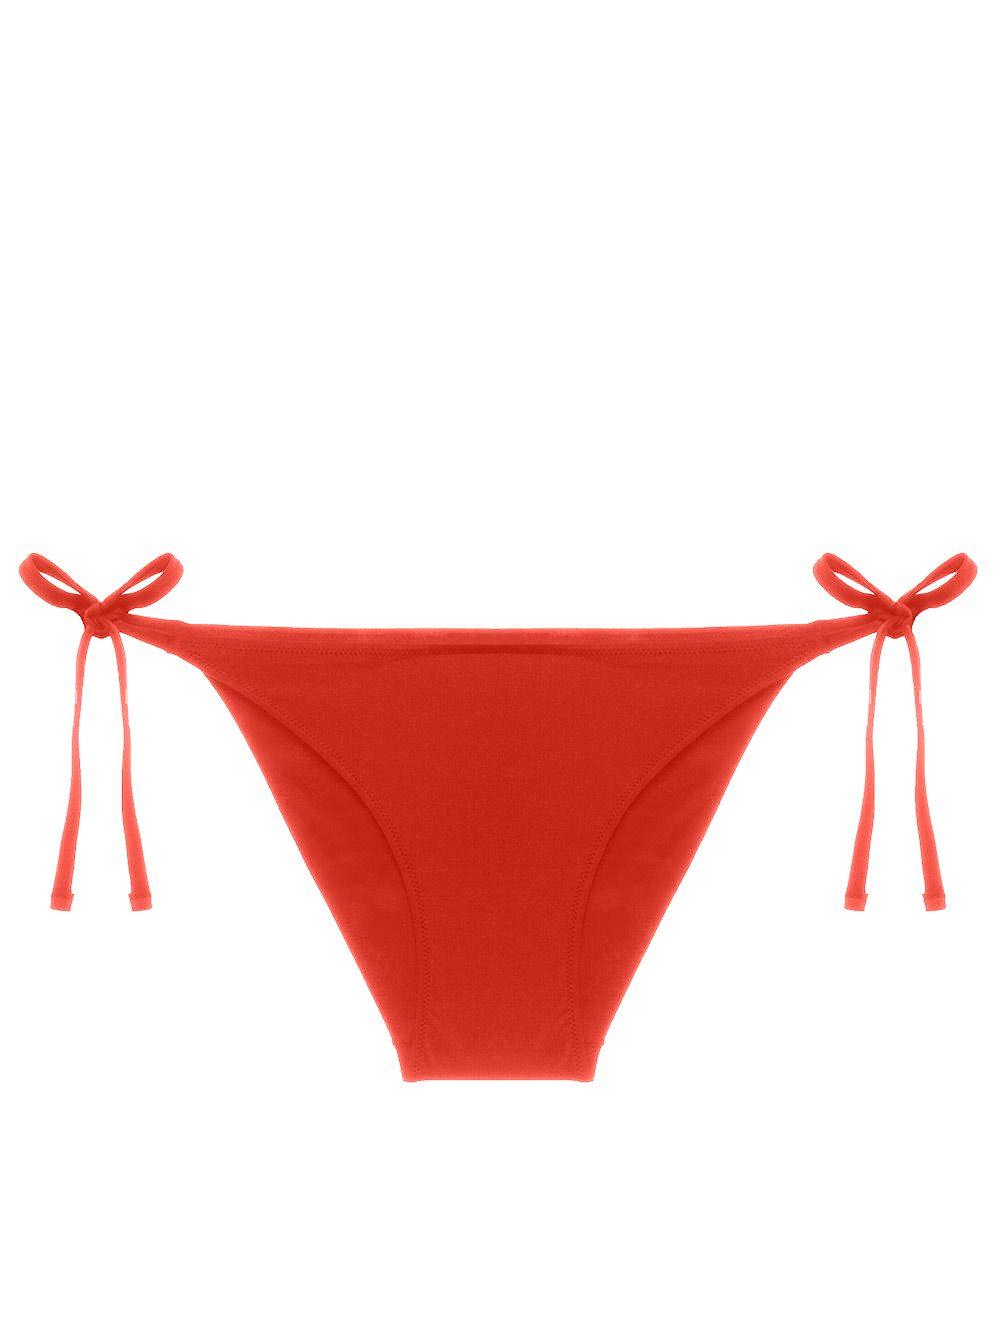 Cosabella Sol Lowrider Italian String Bikini in Red | Lyst